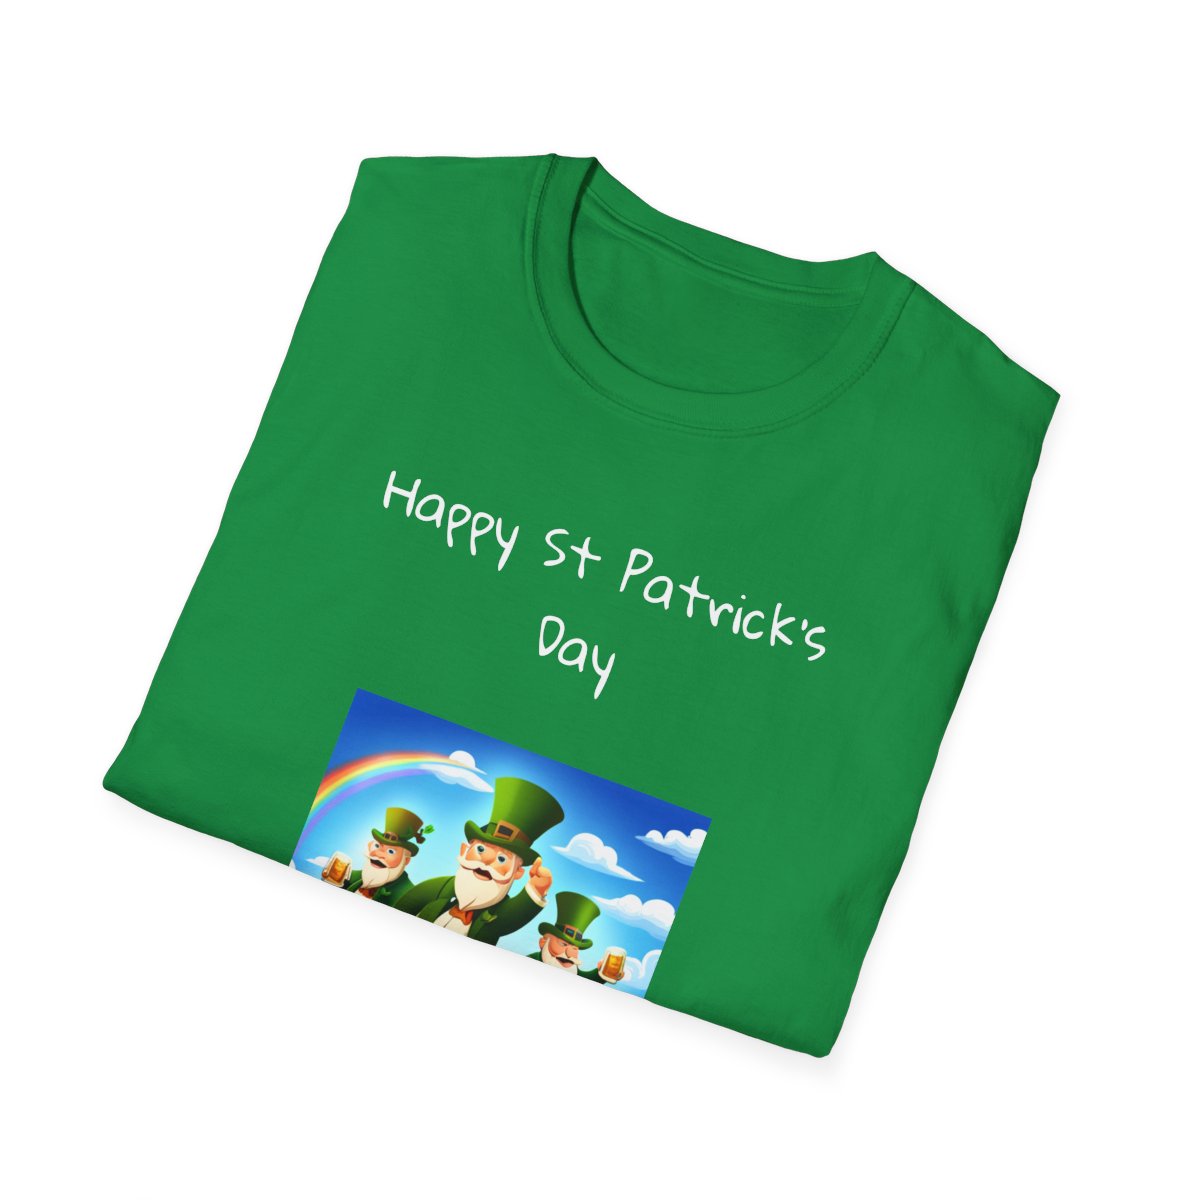 Happy St Patrick's Day, Proudly 1/4 Irish Celebration Tee!  - T-Shirt product thumbnail image